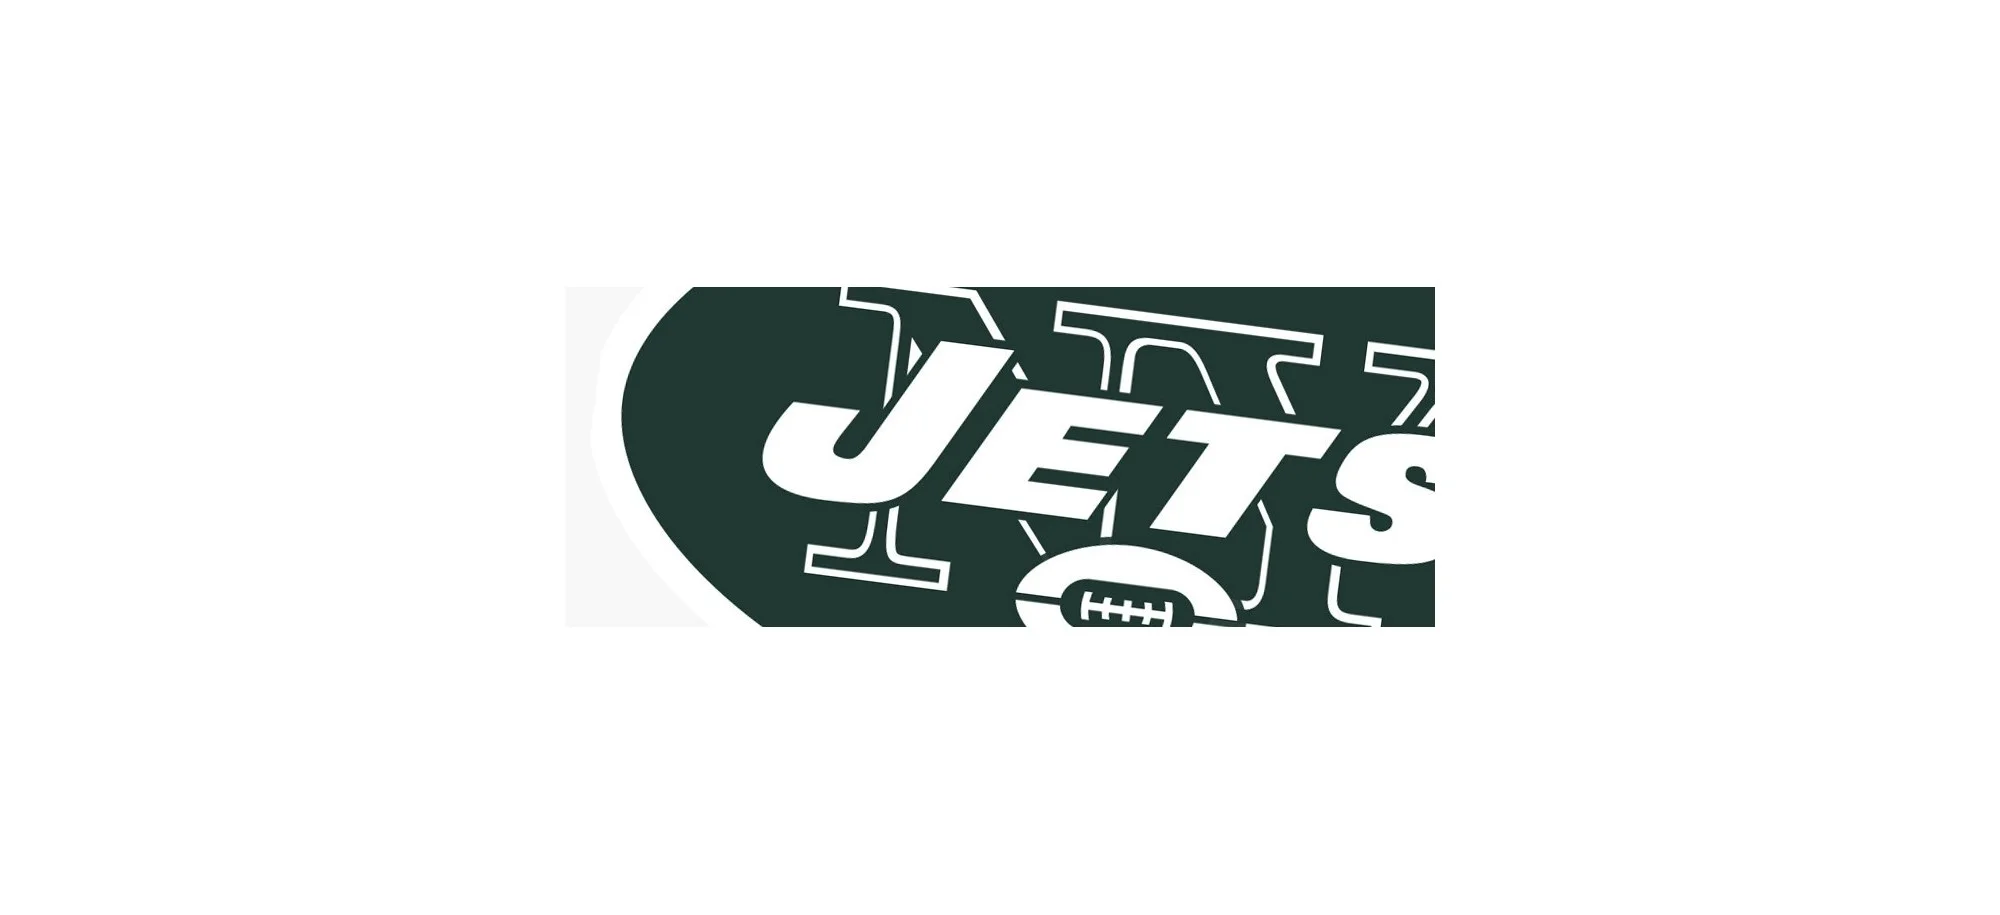 Räumung New York Jets